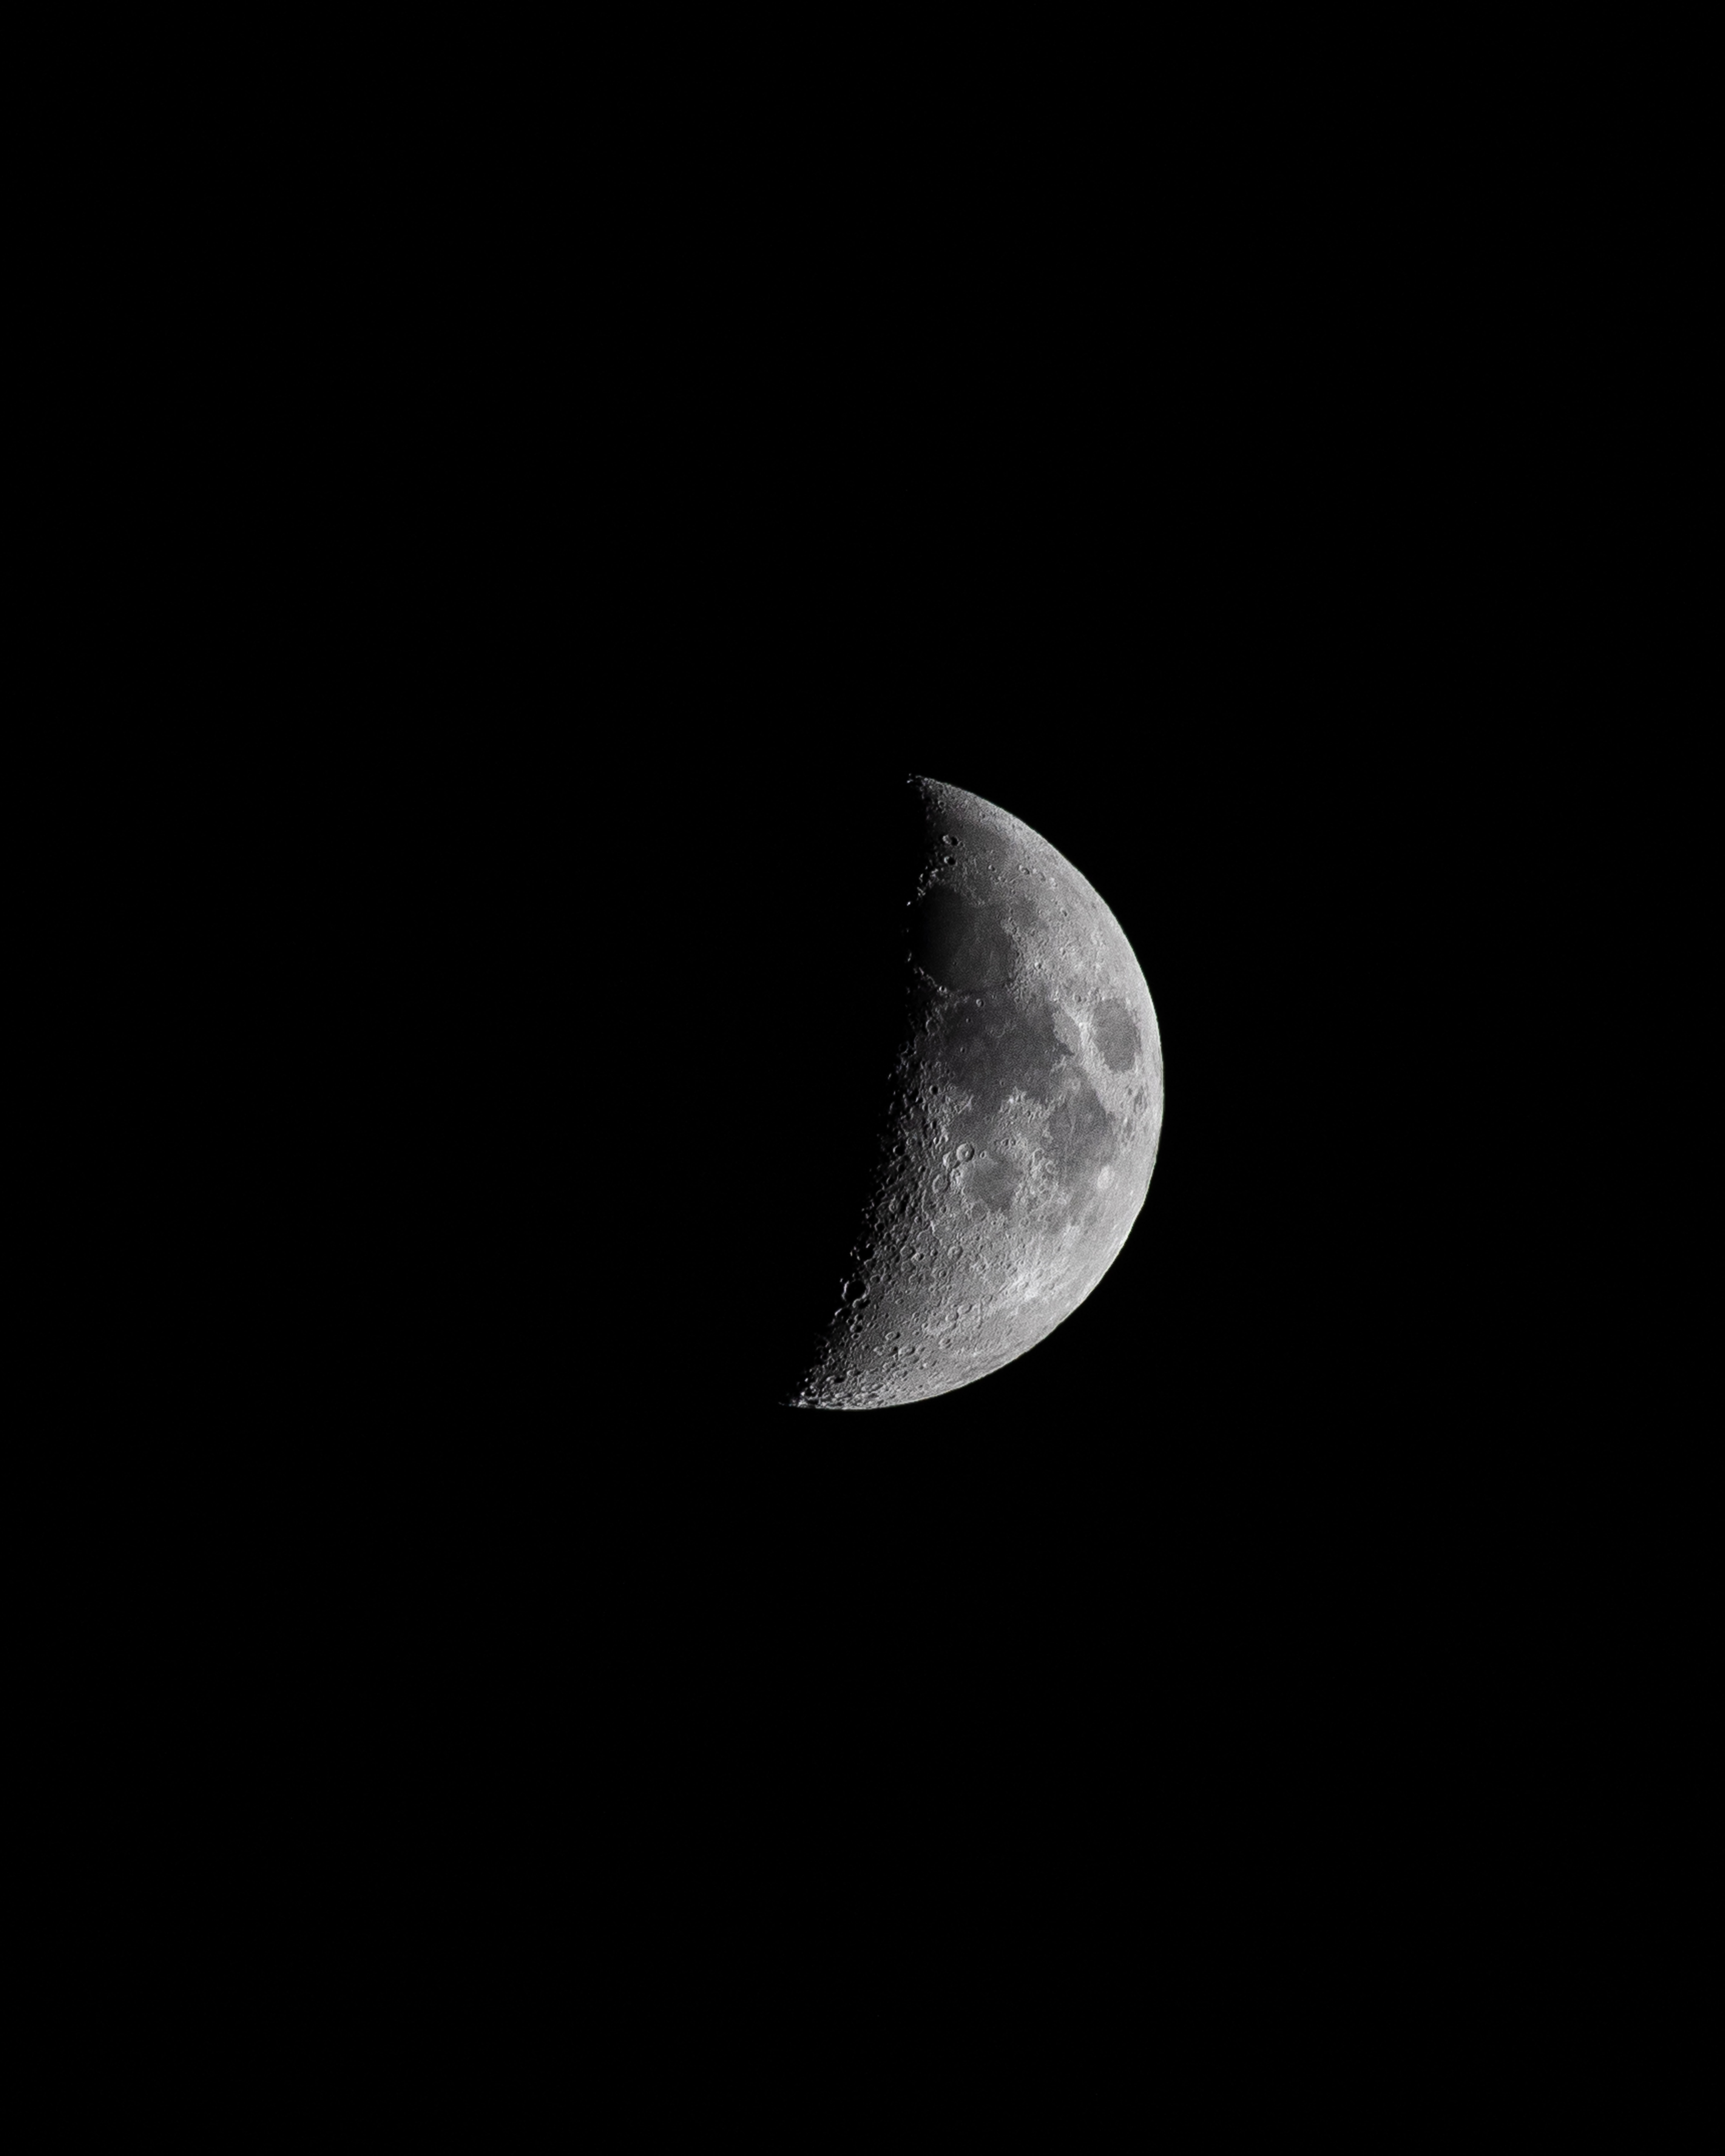 moon, night, black, shadow, craters 8K